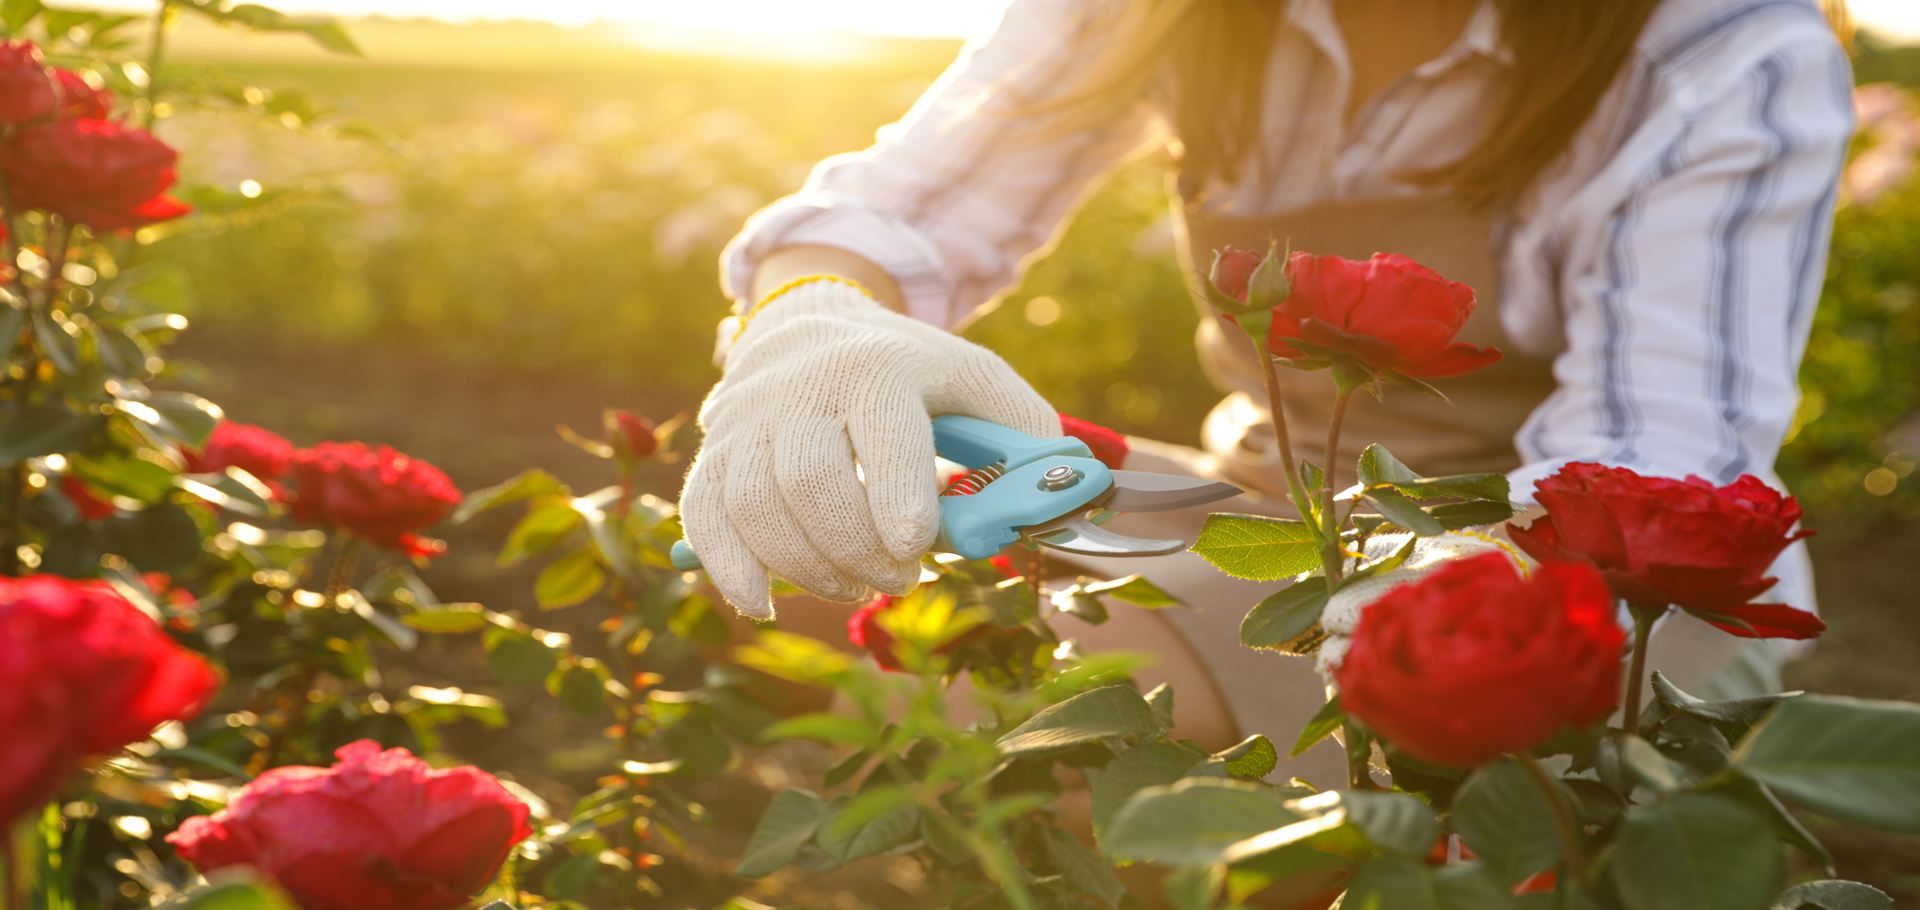 How to prune a rosebush